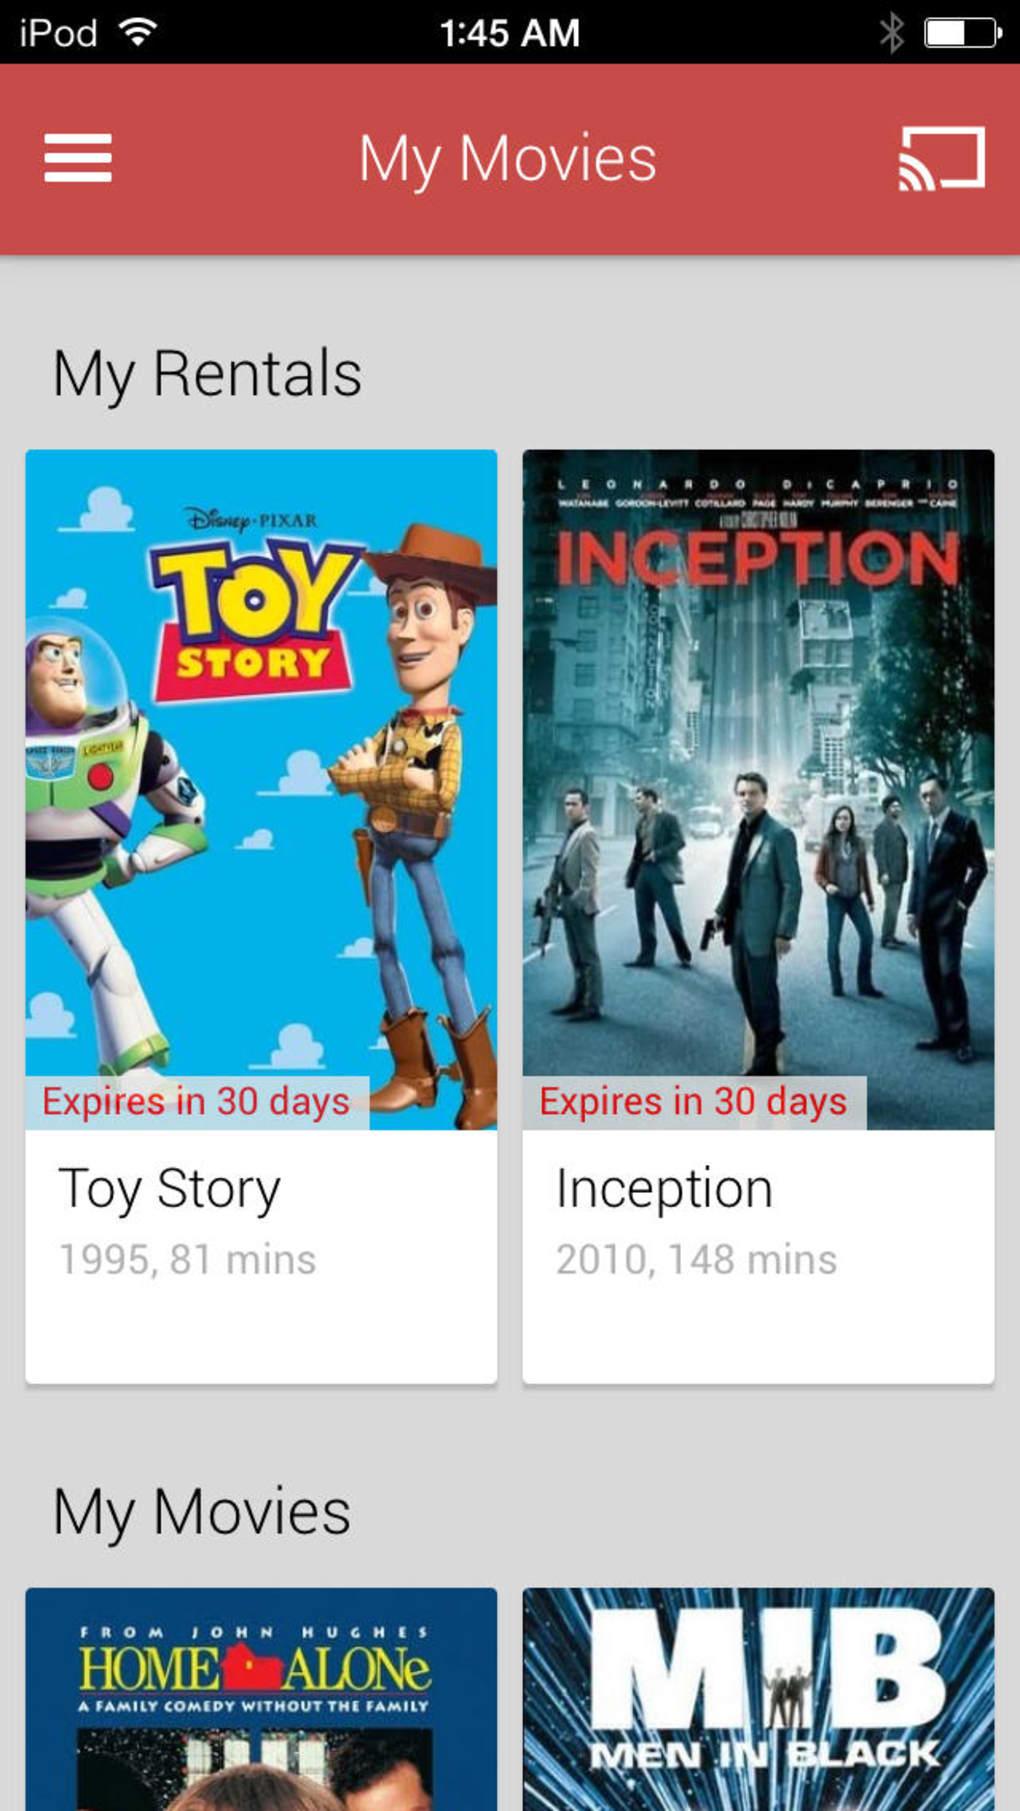 Download Google Play Filmes